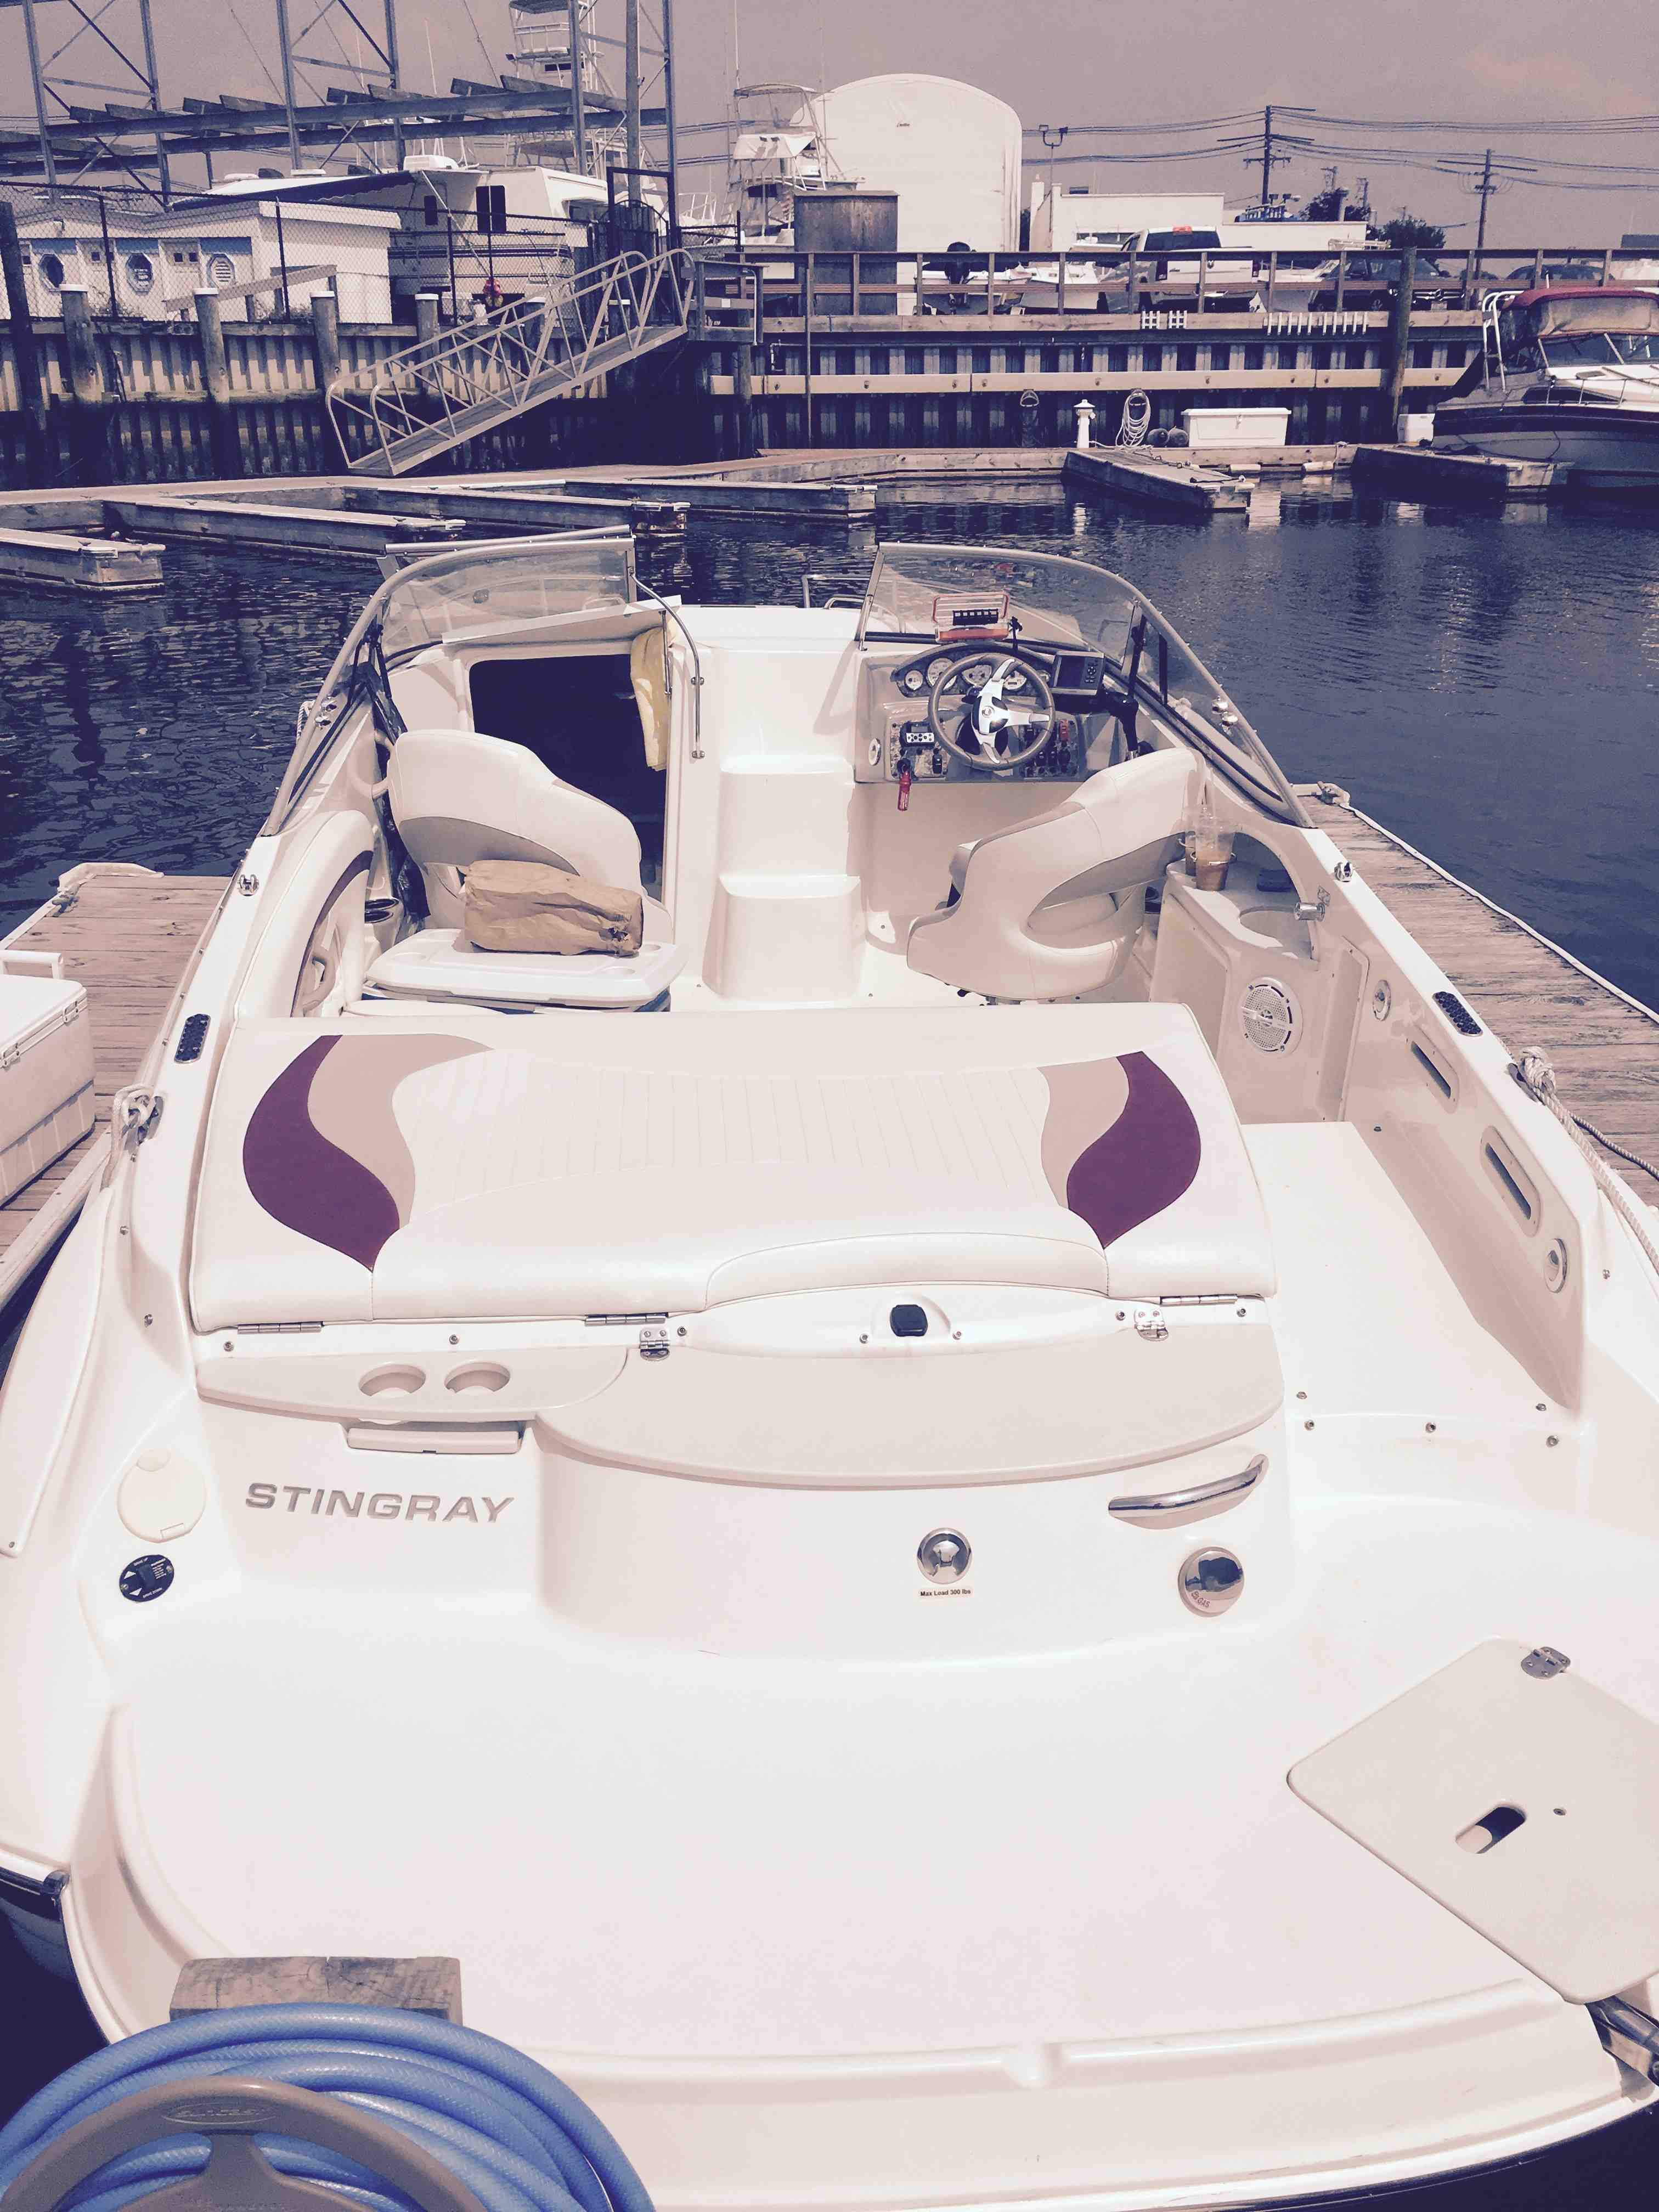 Ricardo chunga boat rentals New York Freeport New York  Sting Ray CR235 2013 23 